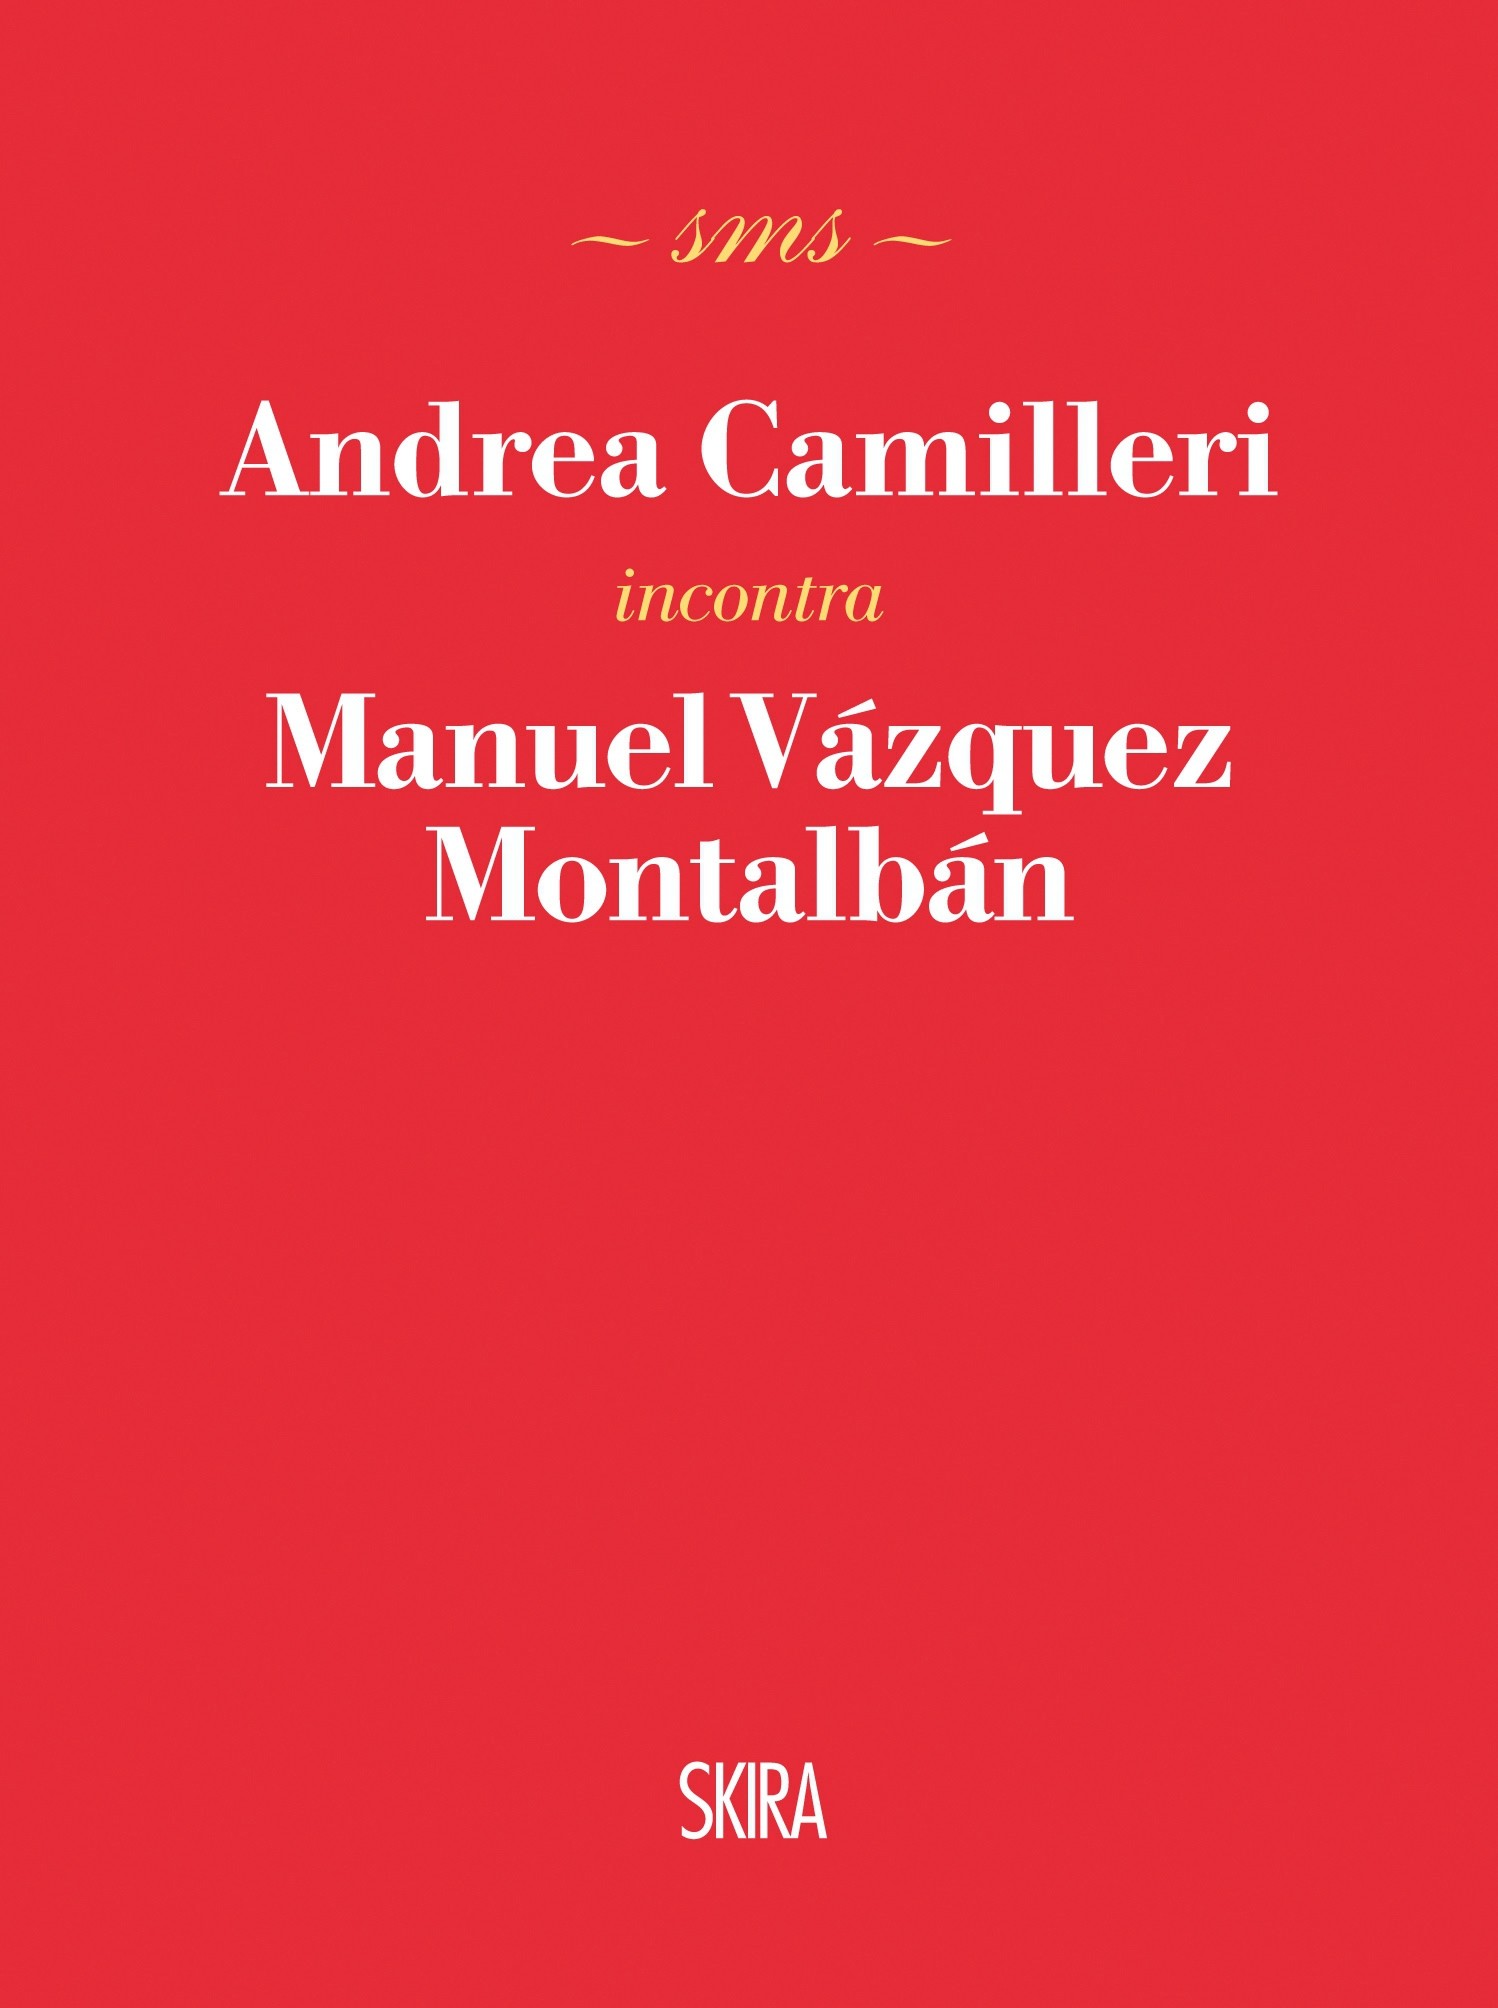 Andrea Camilleri incontra Manuel Vázquez Montalbán - Librerie.coop